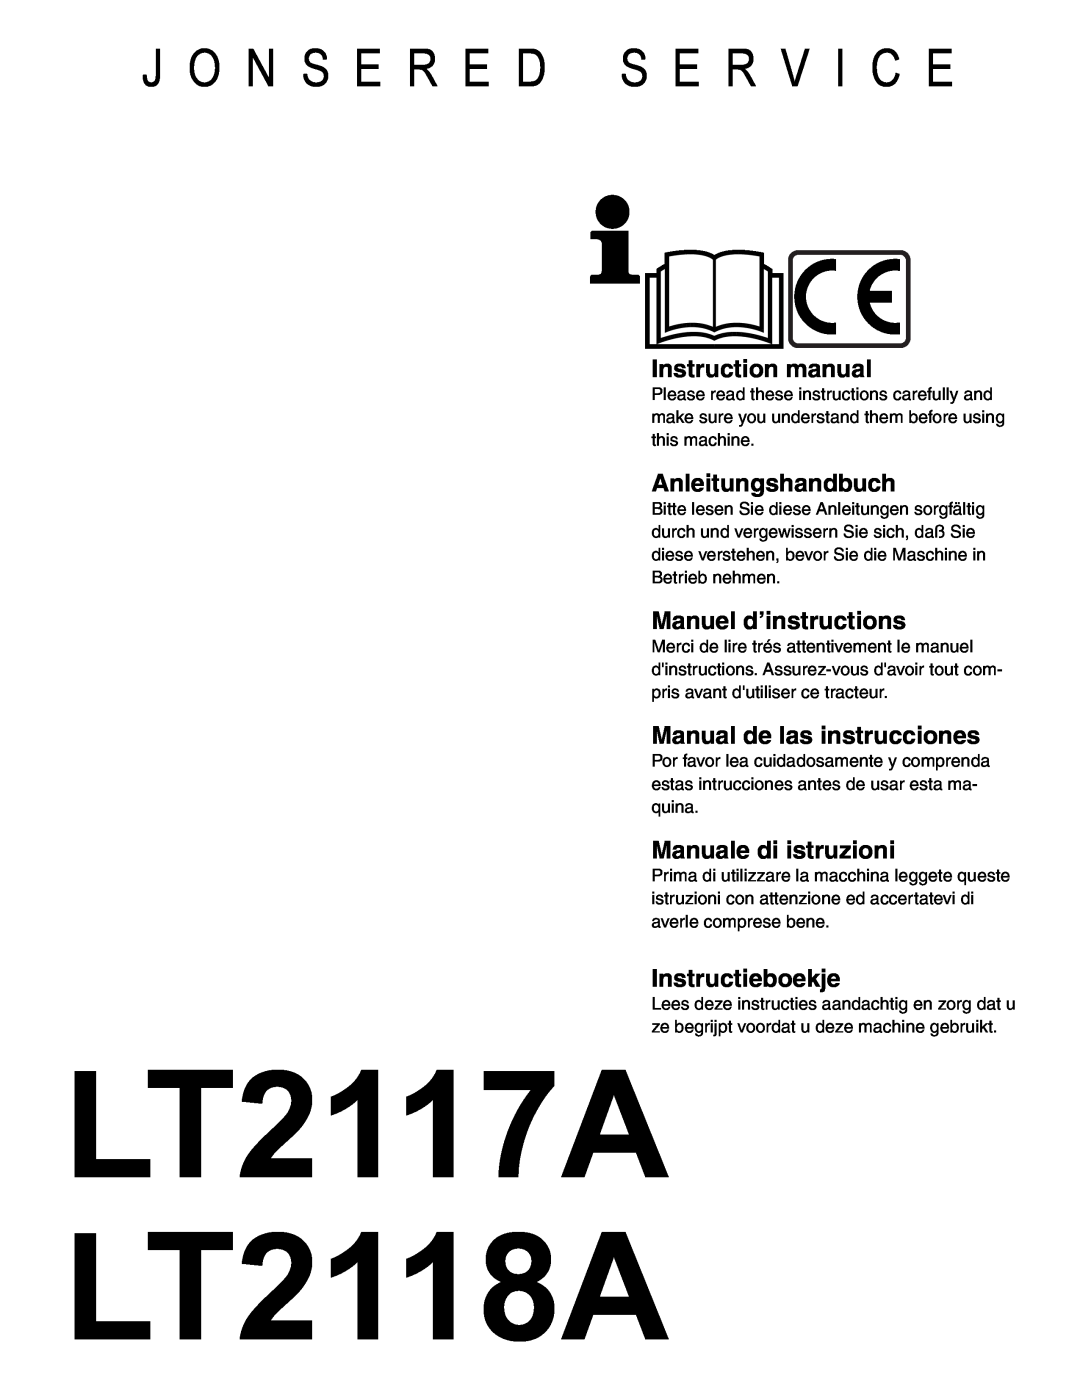 Jonsered instruction manual LT2117A LT2118A, J O N S E R E D S E R V I C E, Anleitungshandbuch, Manuel d’instructions 